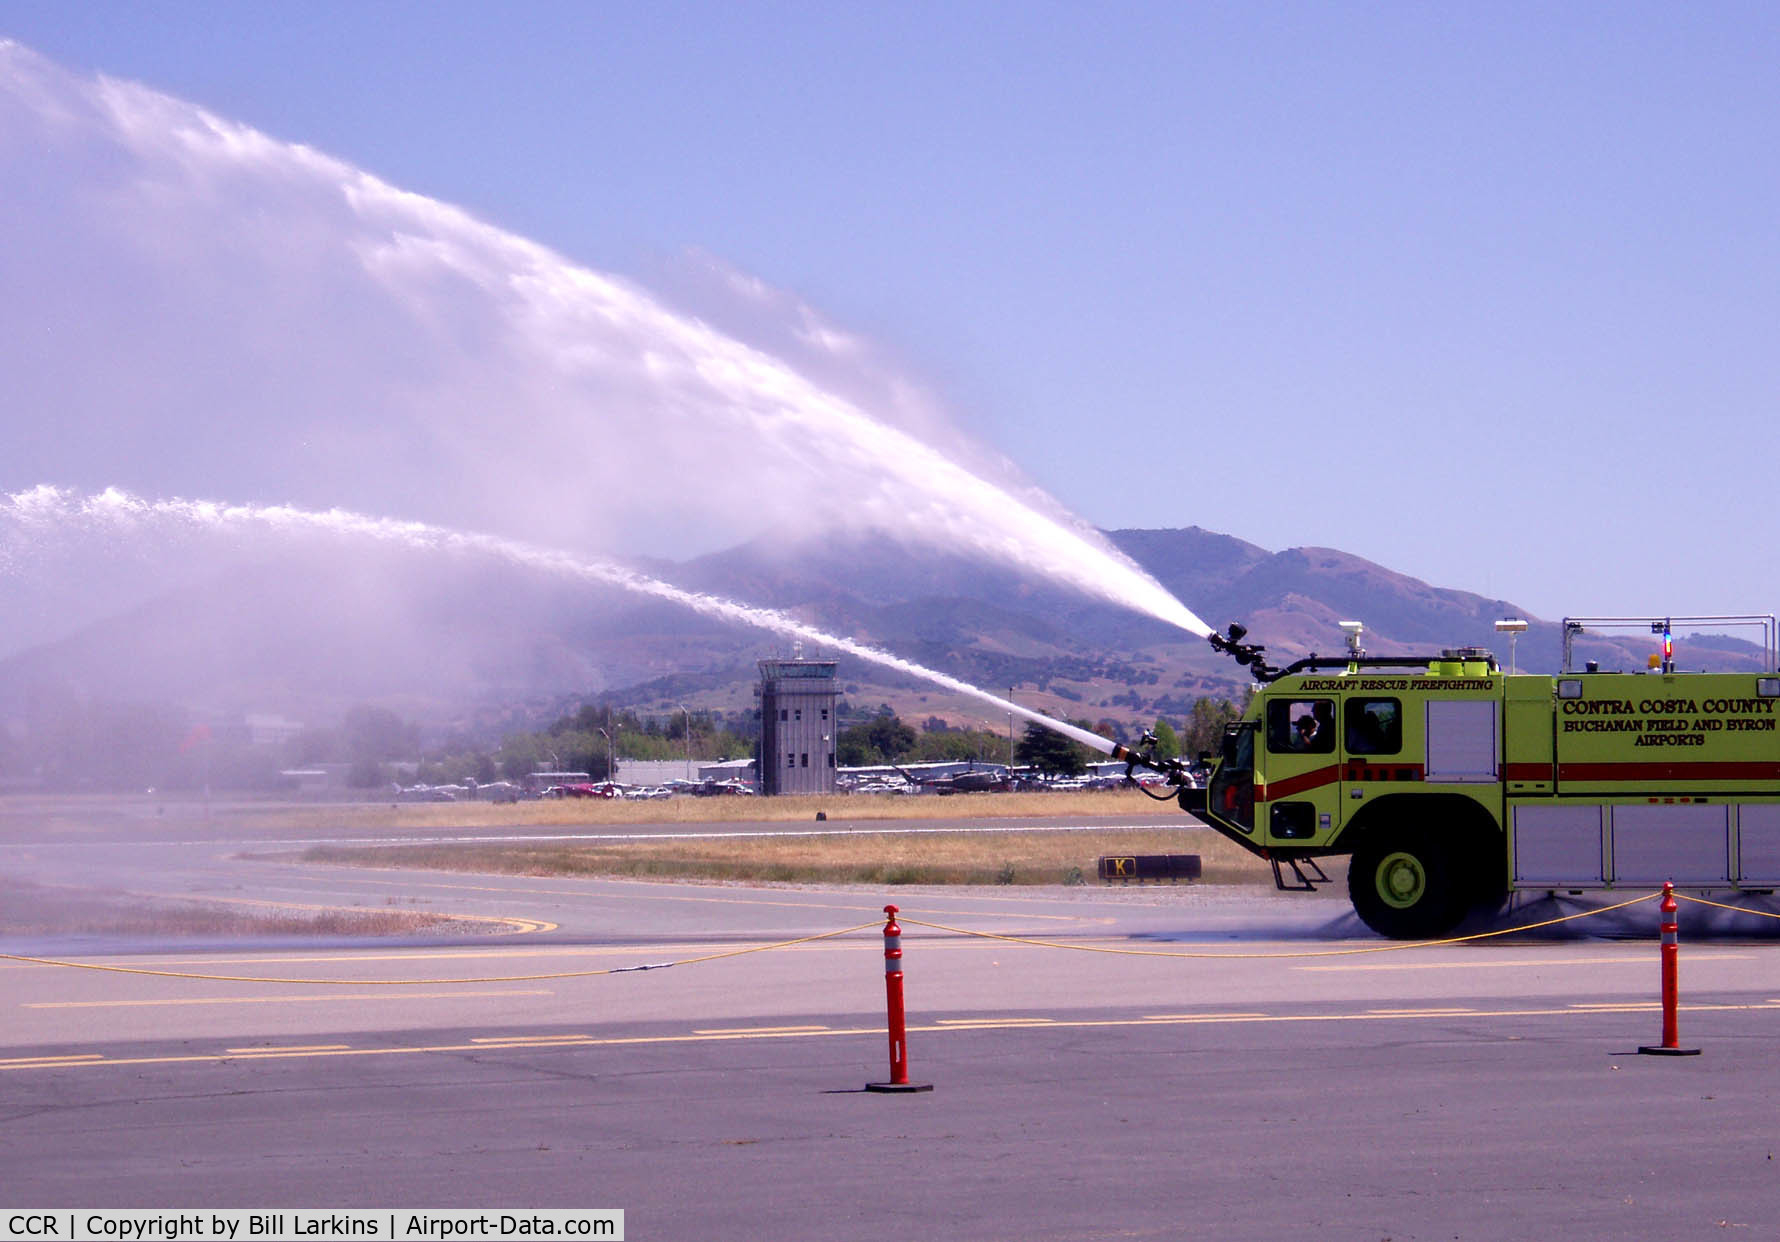 Buchanan Field Airport (CCR) - Fire fighting demonstration